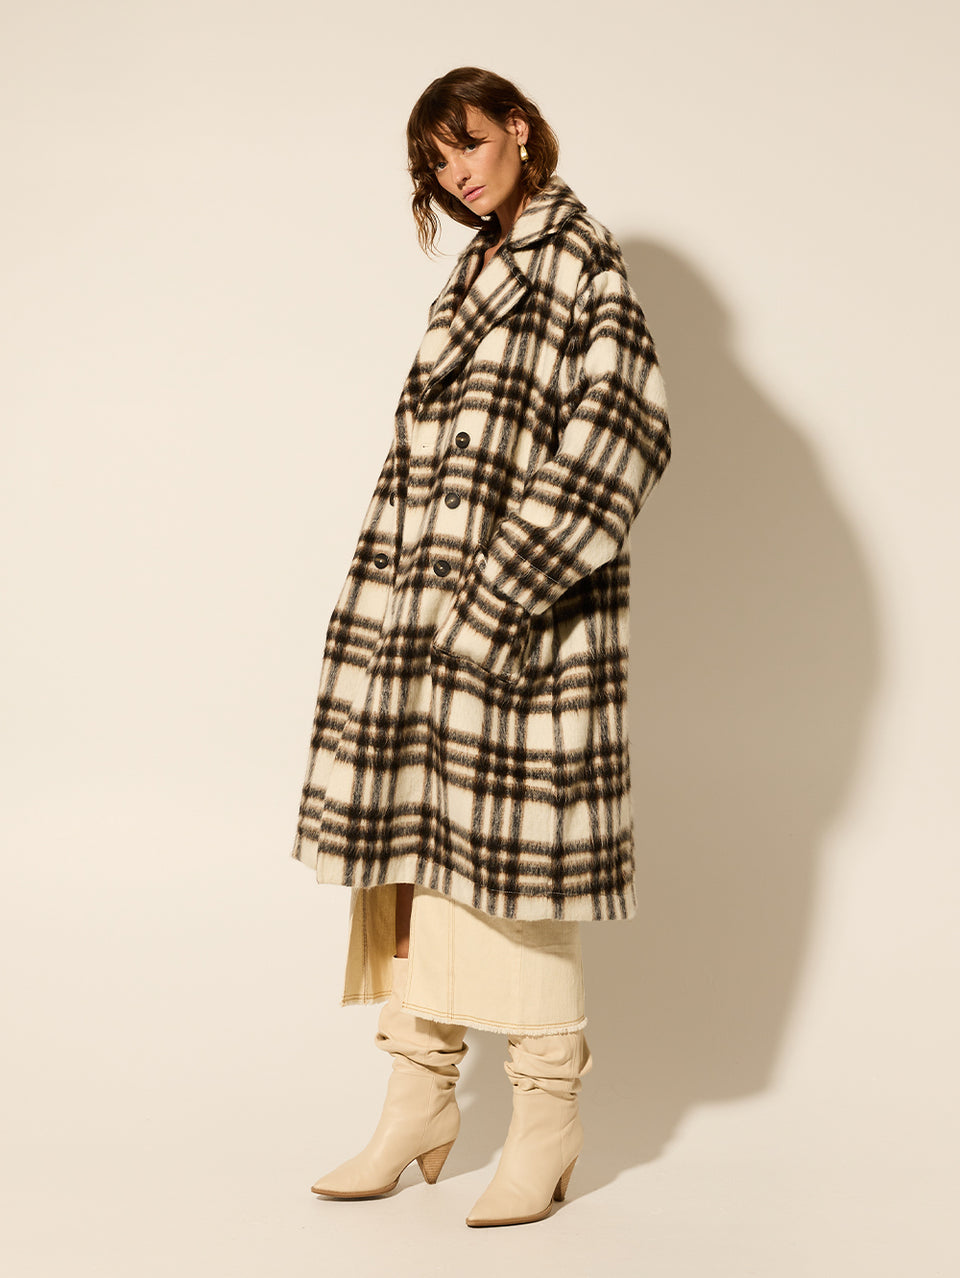 Kinley Coat KIVARI | Model wears brown check coat side view